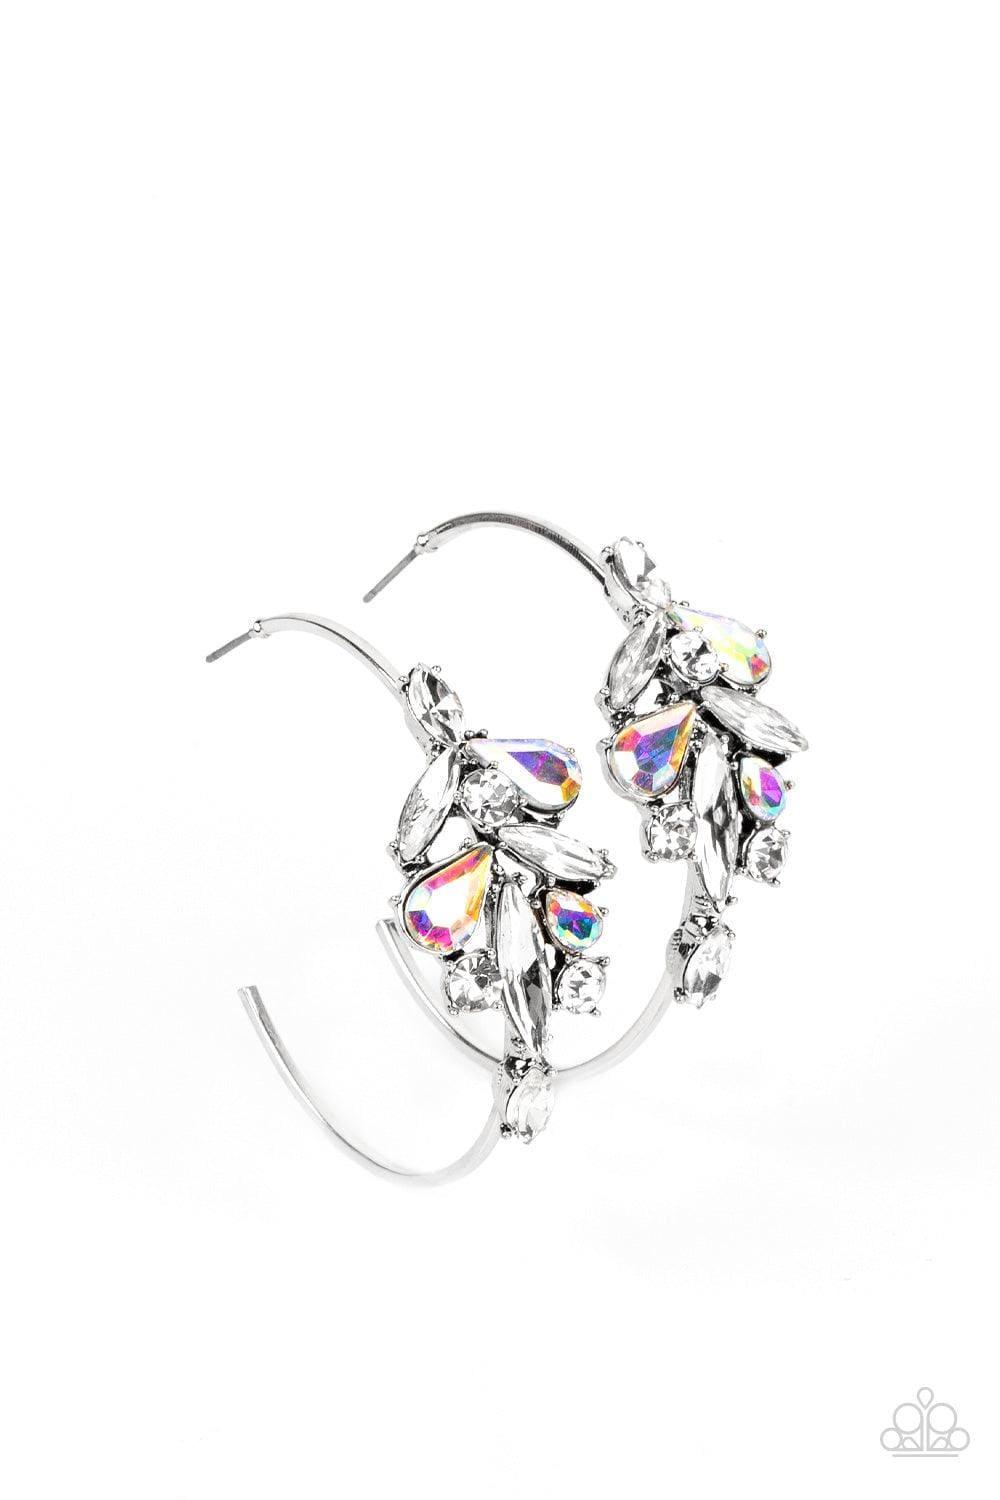 Paparazzi Accessories - Arctic Attitude - Multicolor Hoop Earrings - Bling by JessieK